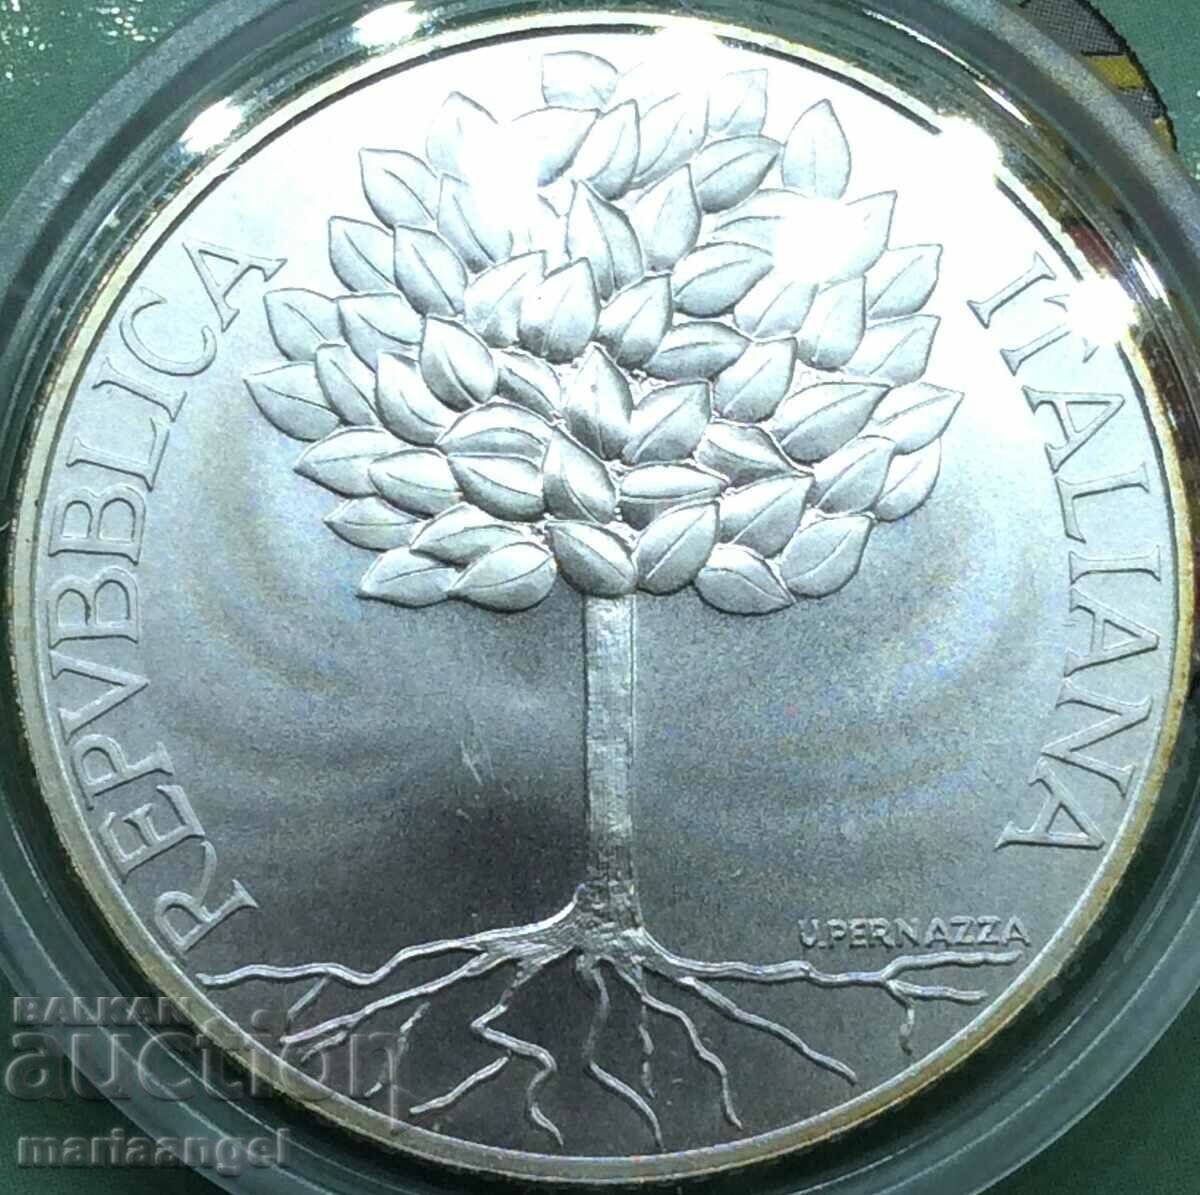 5 Euro 2003 Ιταλία "United Europe" UNC Silver